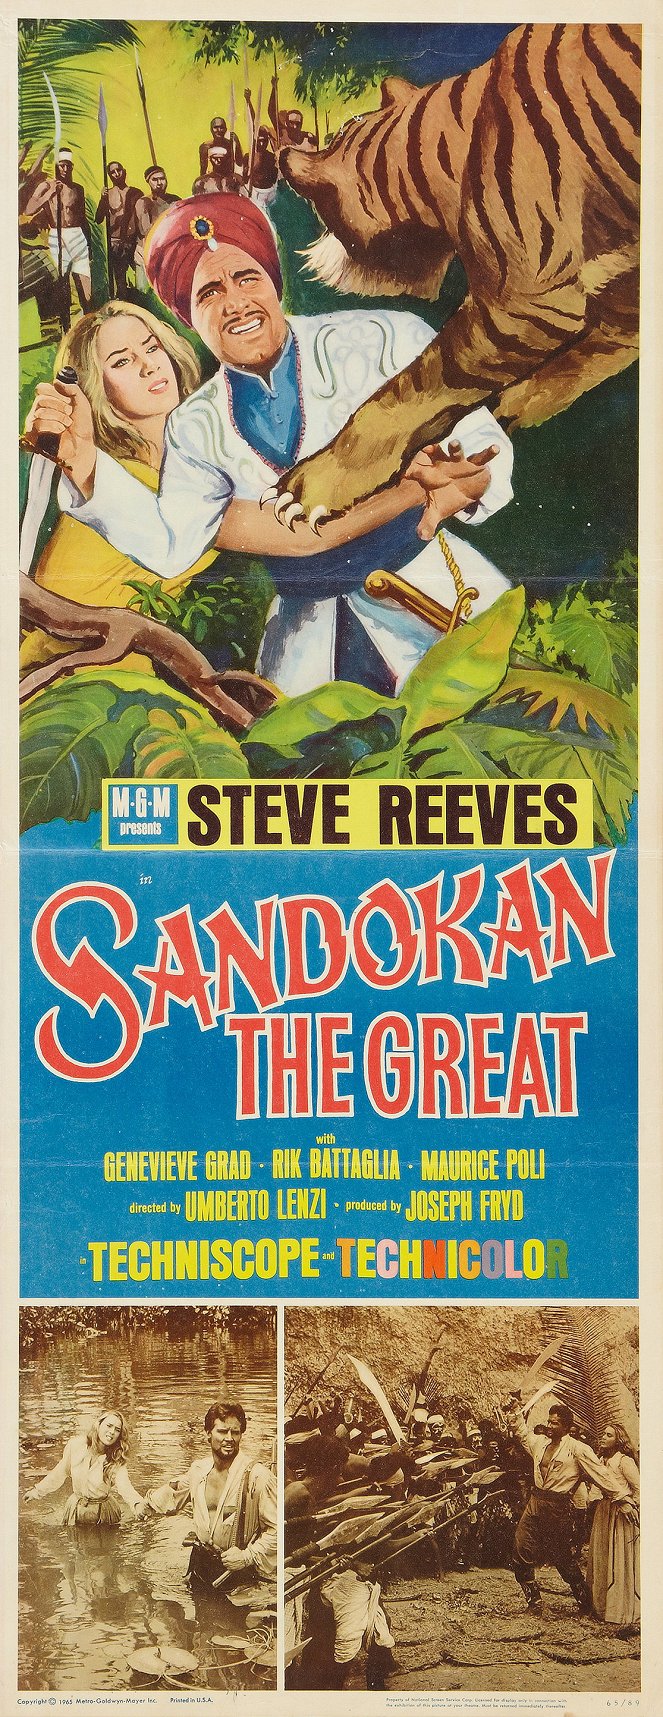 Sandokan the Great - Posters